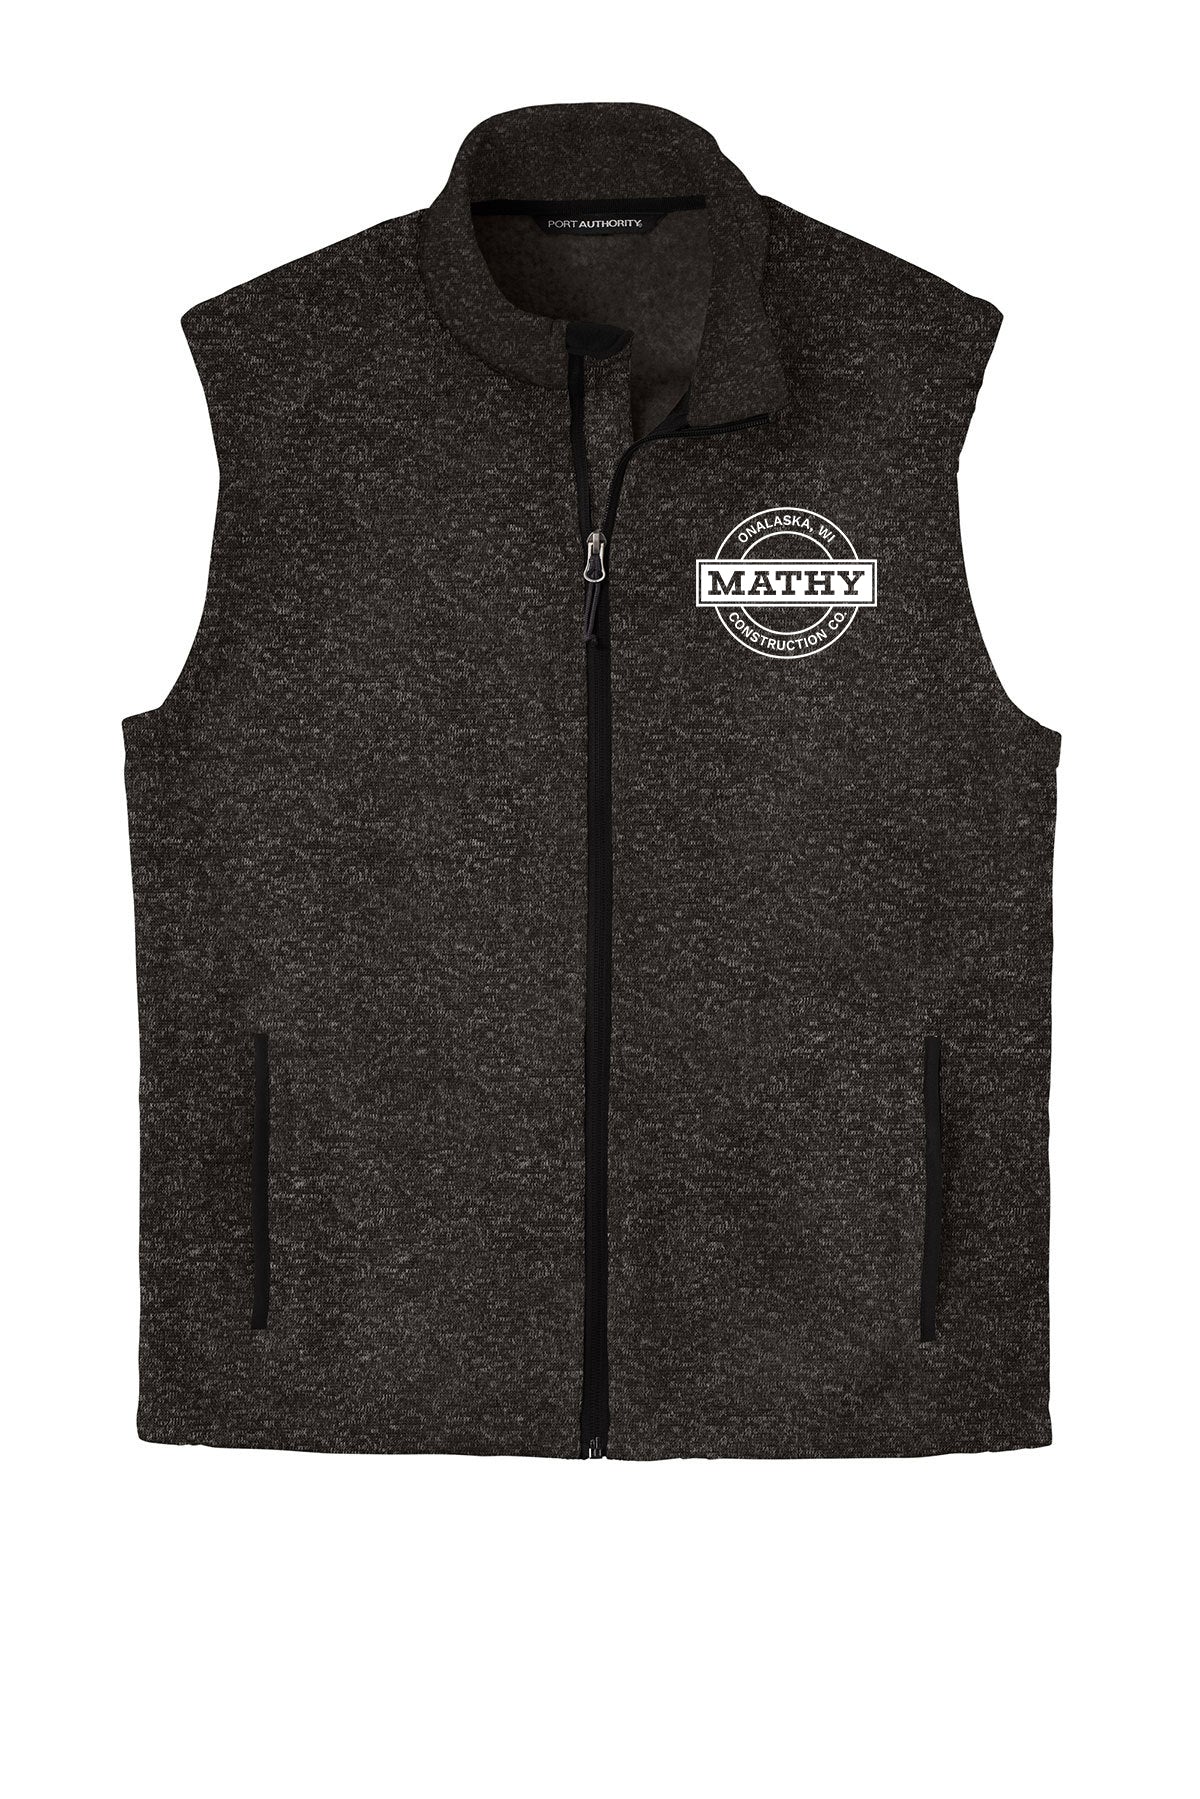 Mathy Construction Sweater Fleece Vest